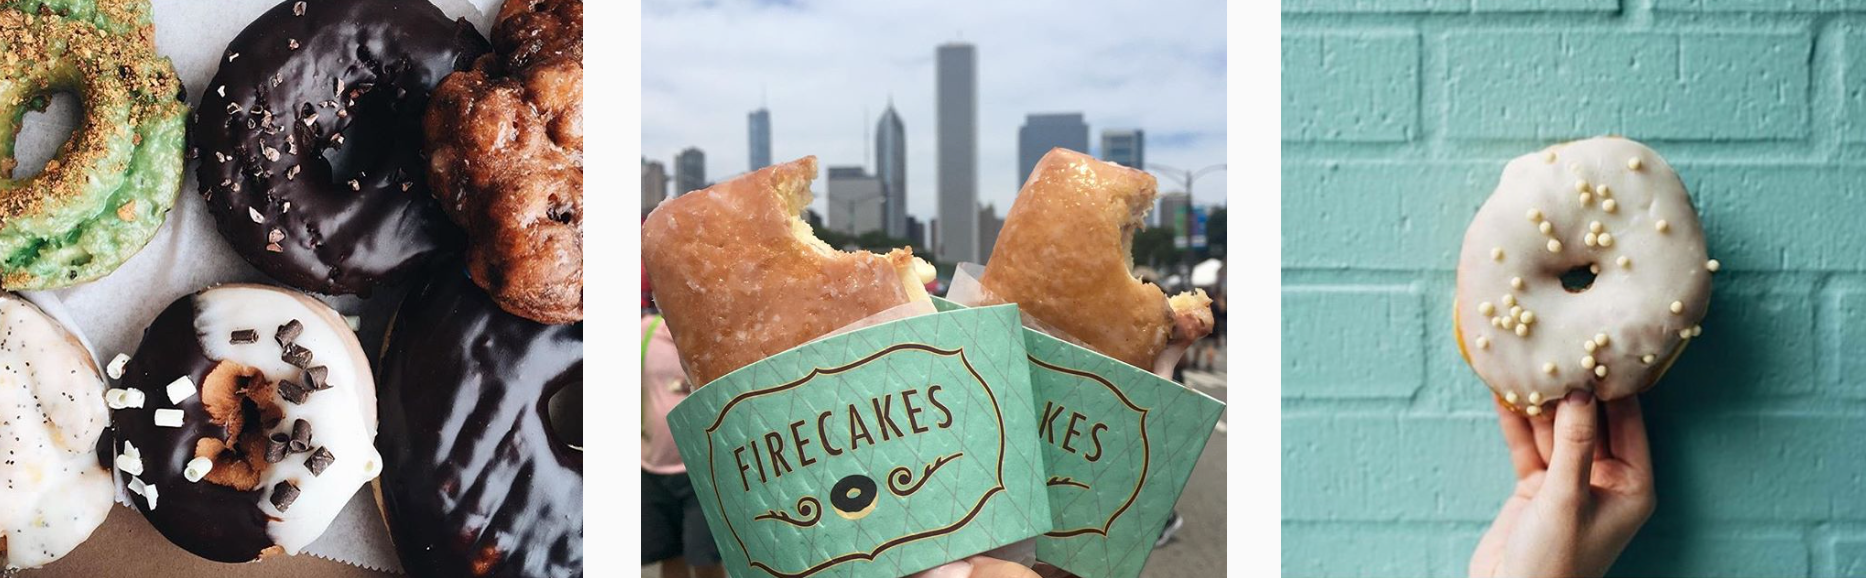 Doughnut Instagram Accounts You Need to Follow - PLANOLY - Firecakes Chicago